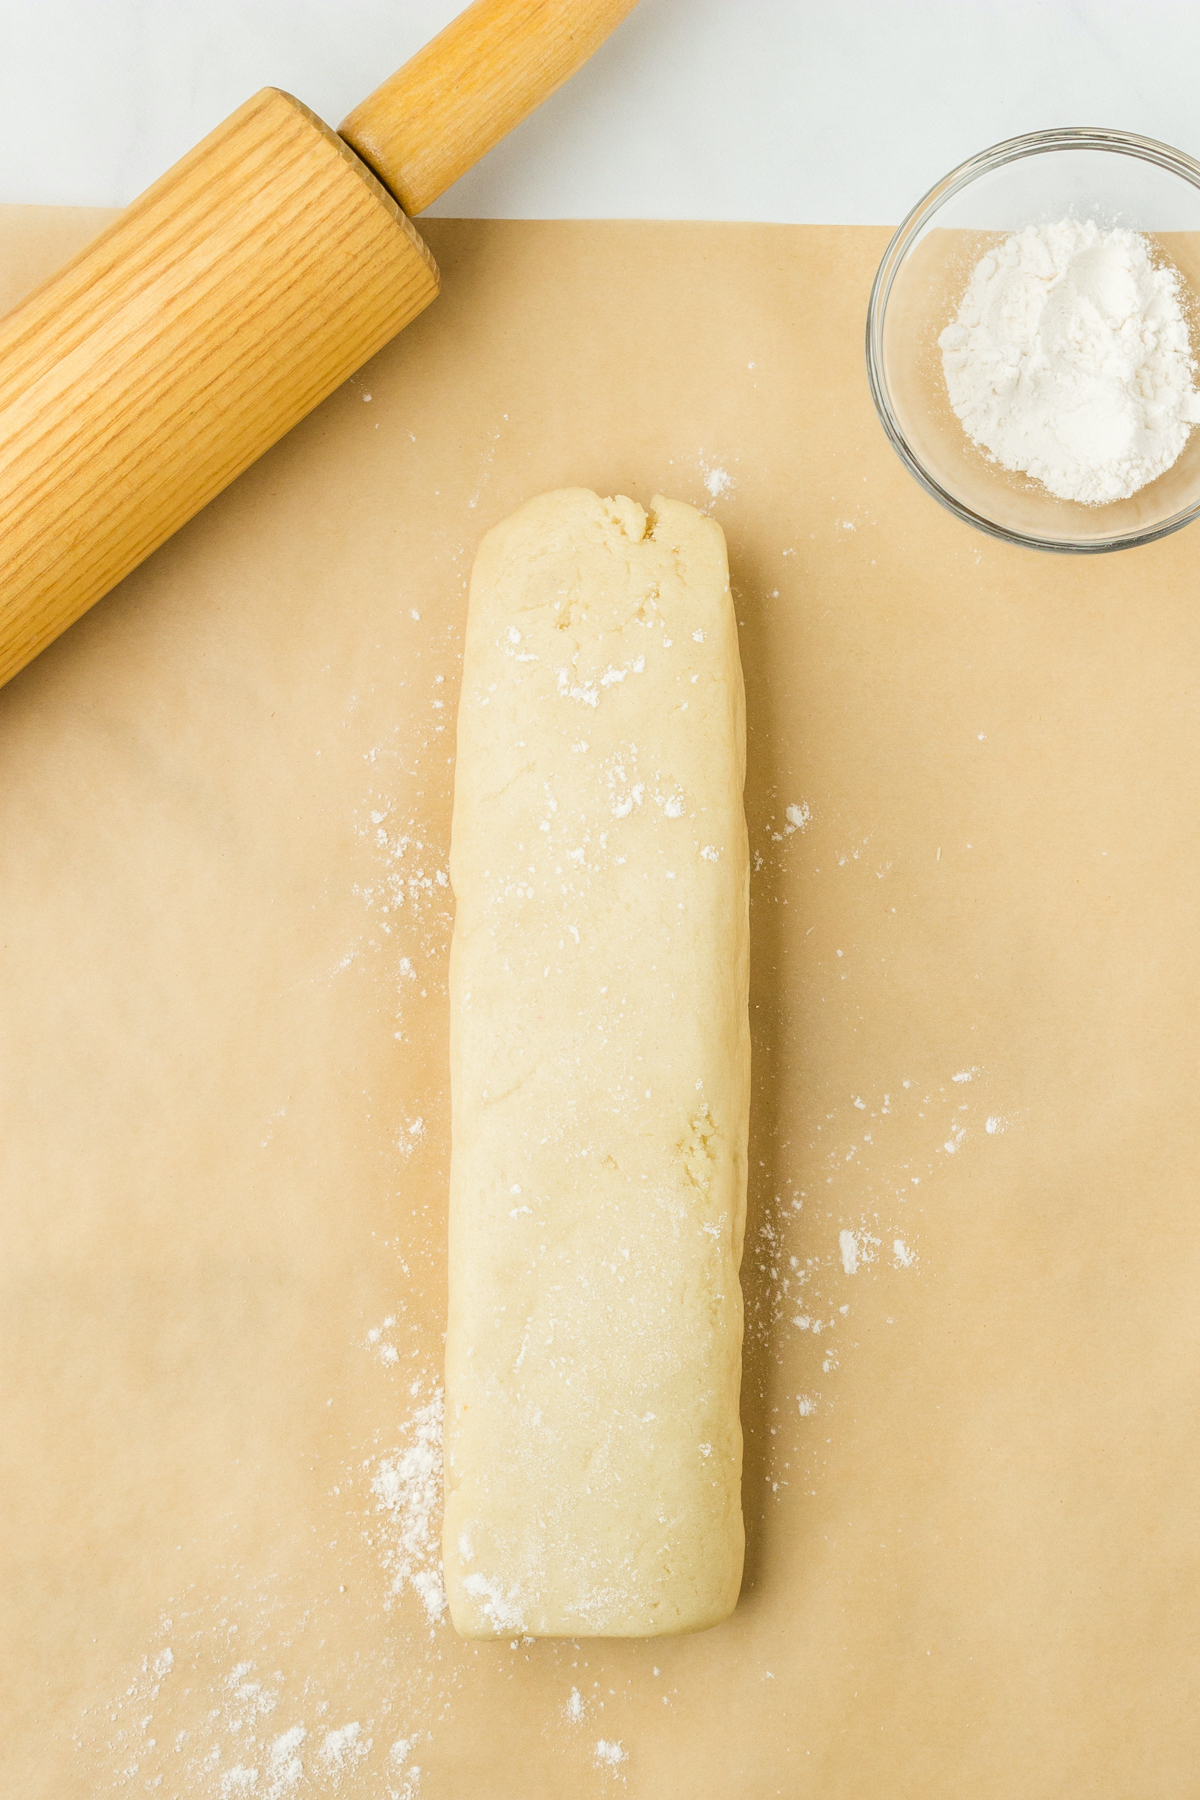 Sugar cookie dough roll on parchment paper.